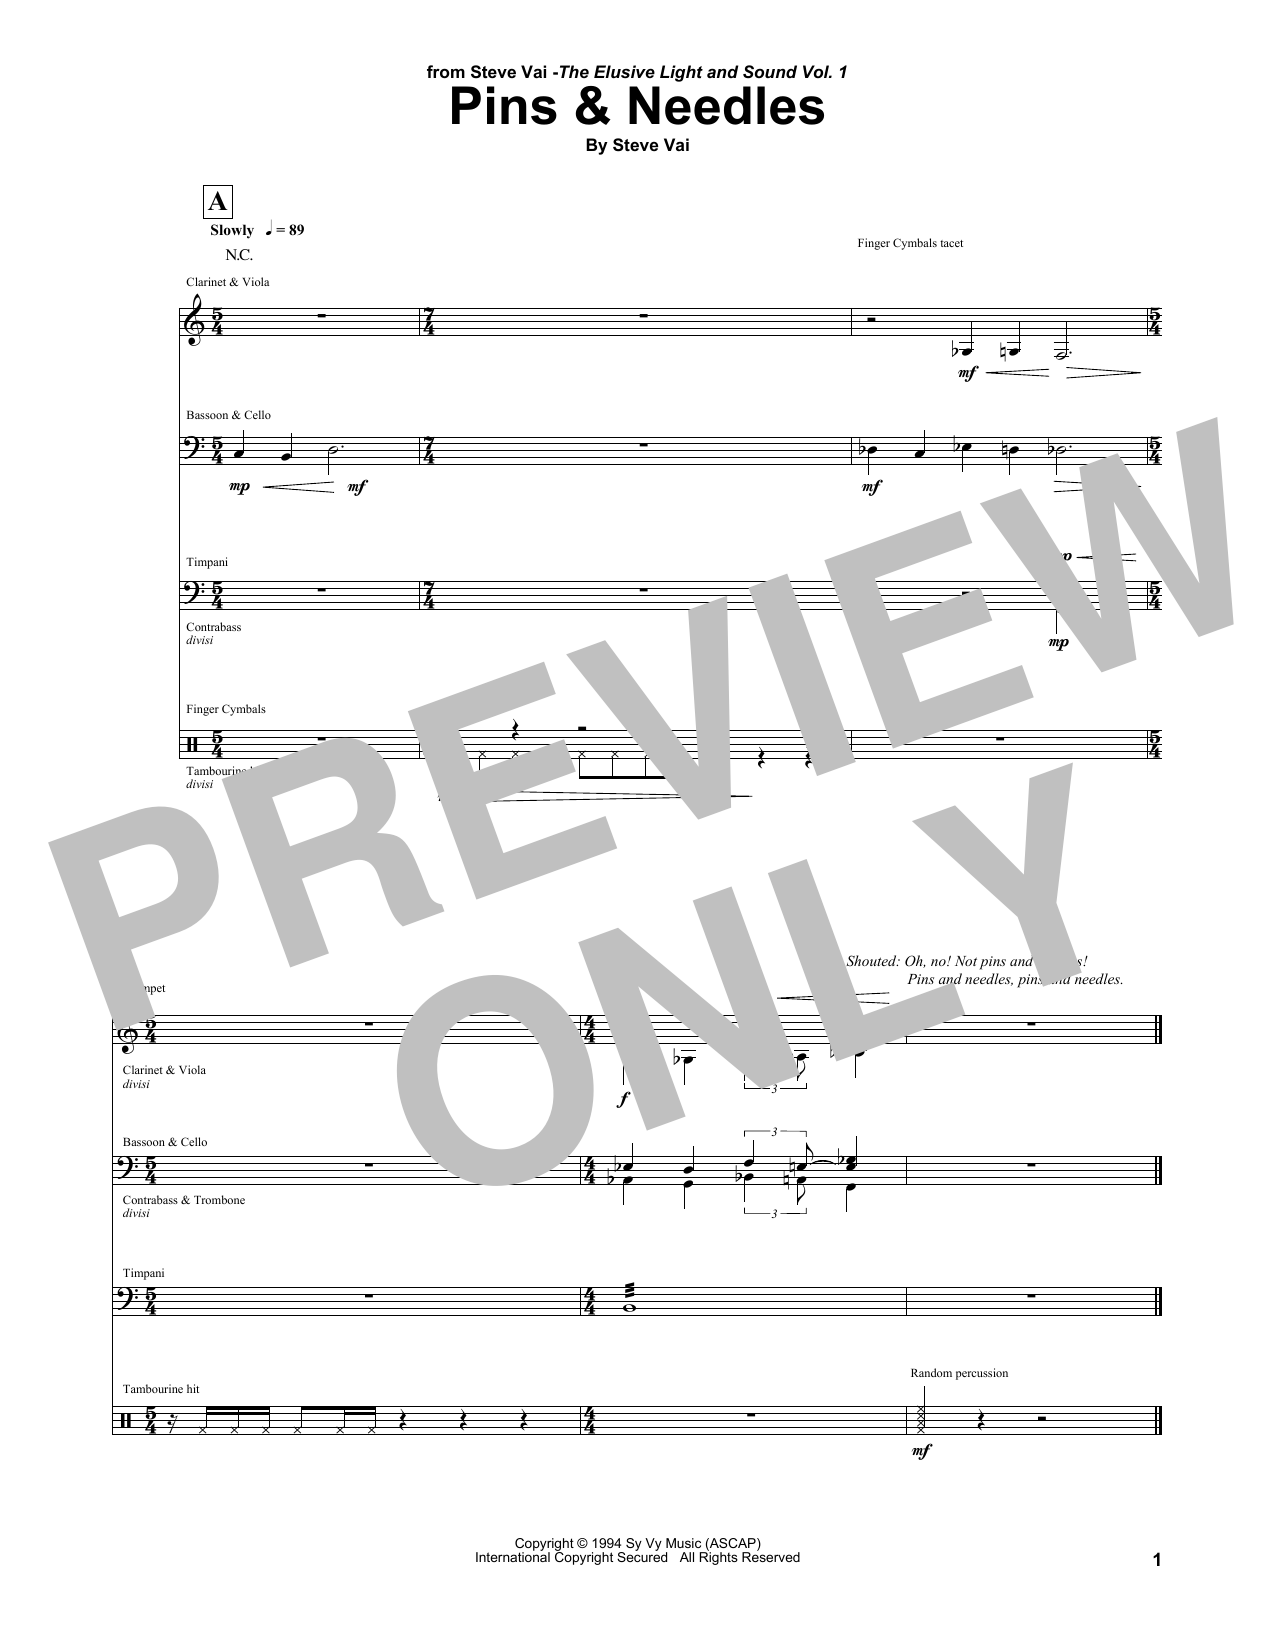 Steve Vai Pins & Needles Sheet Music Notes & Chords for Guitar Tab - Download or Print PDF